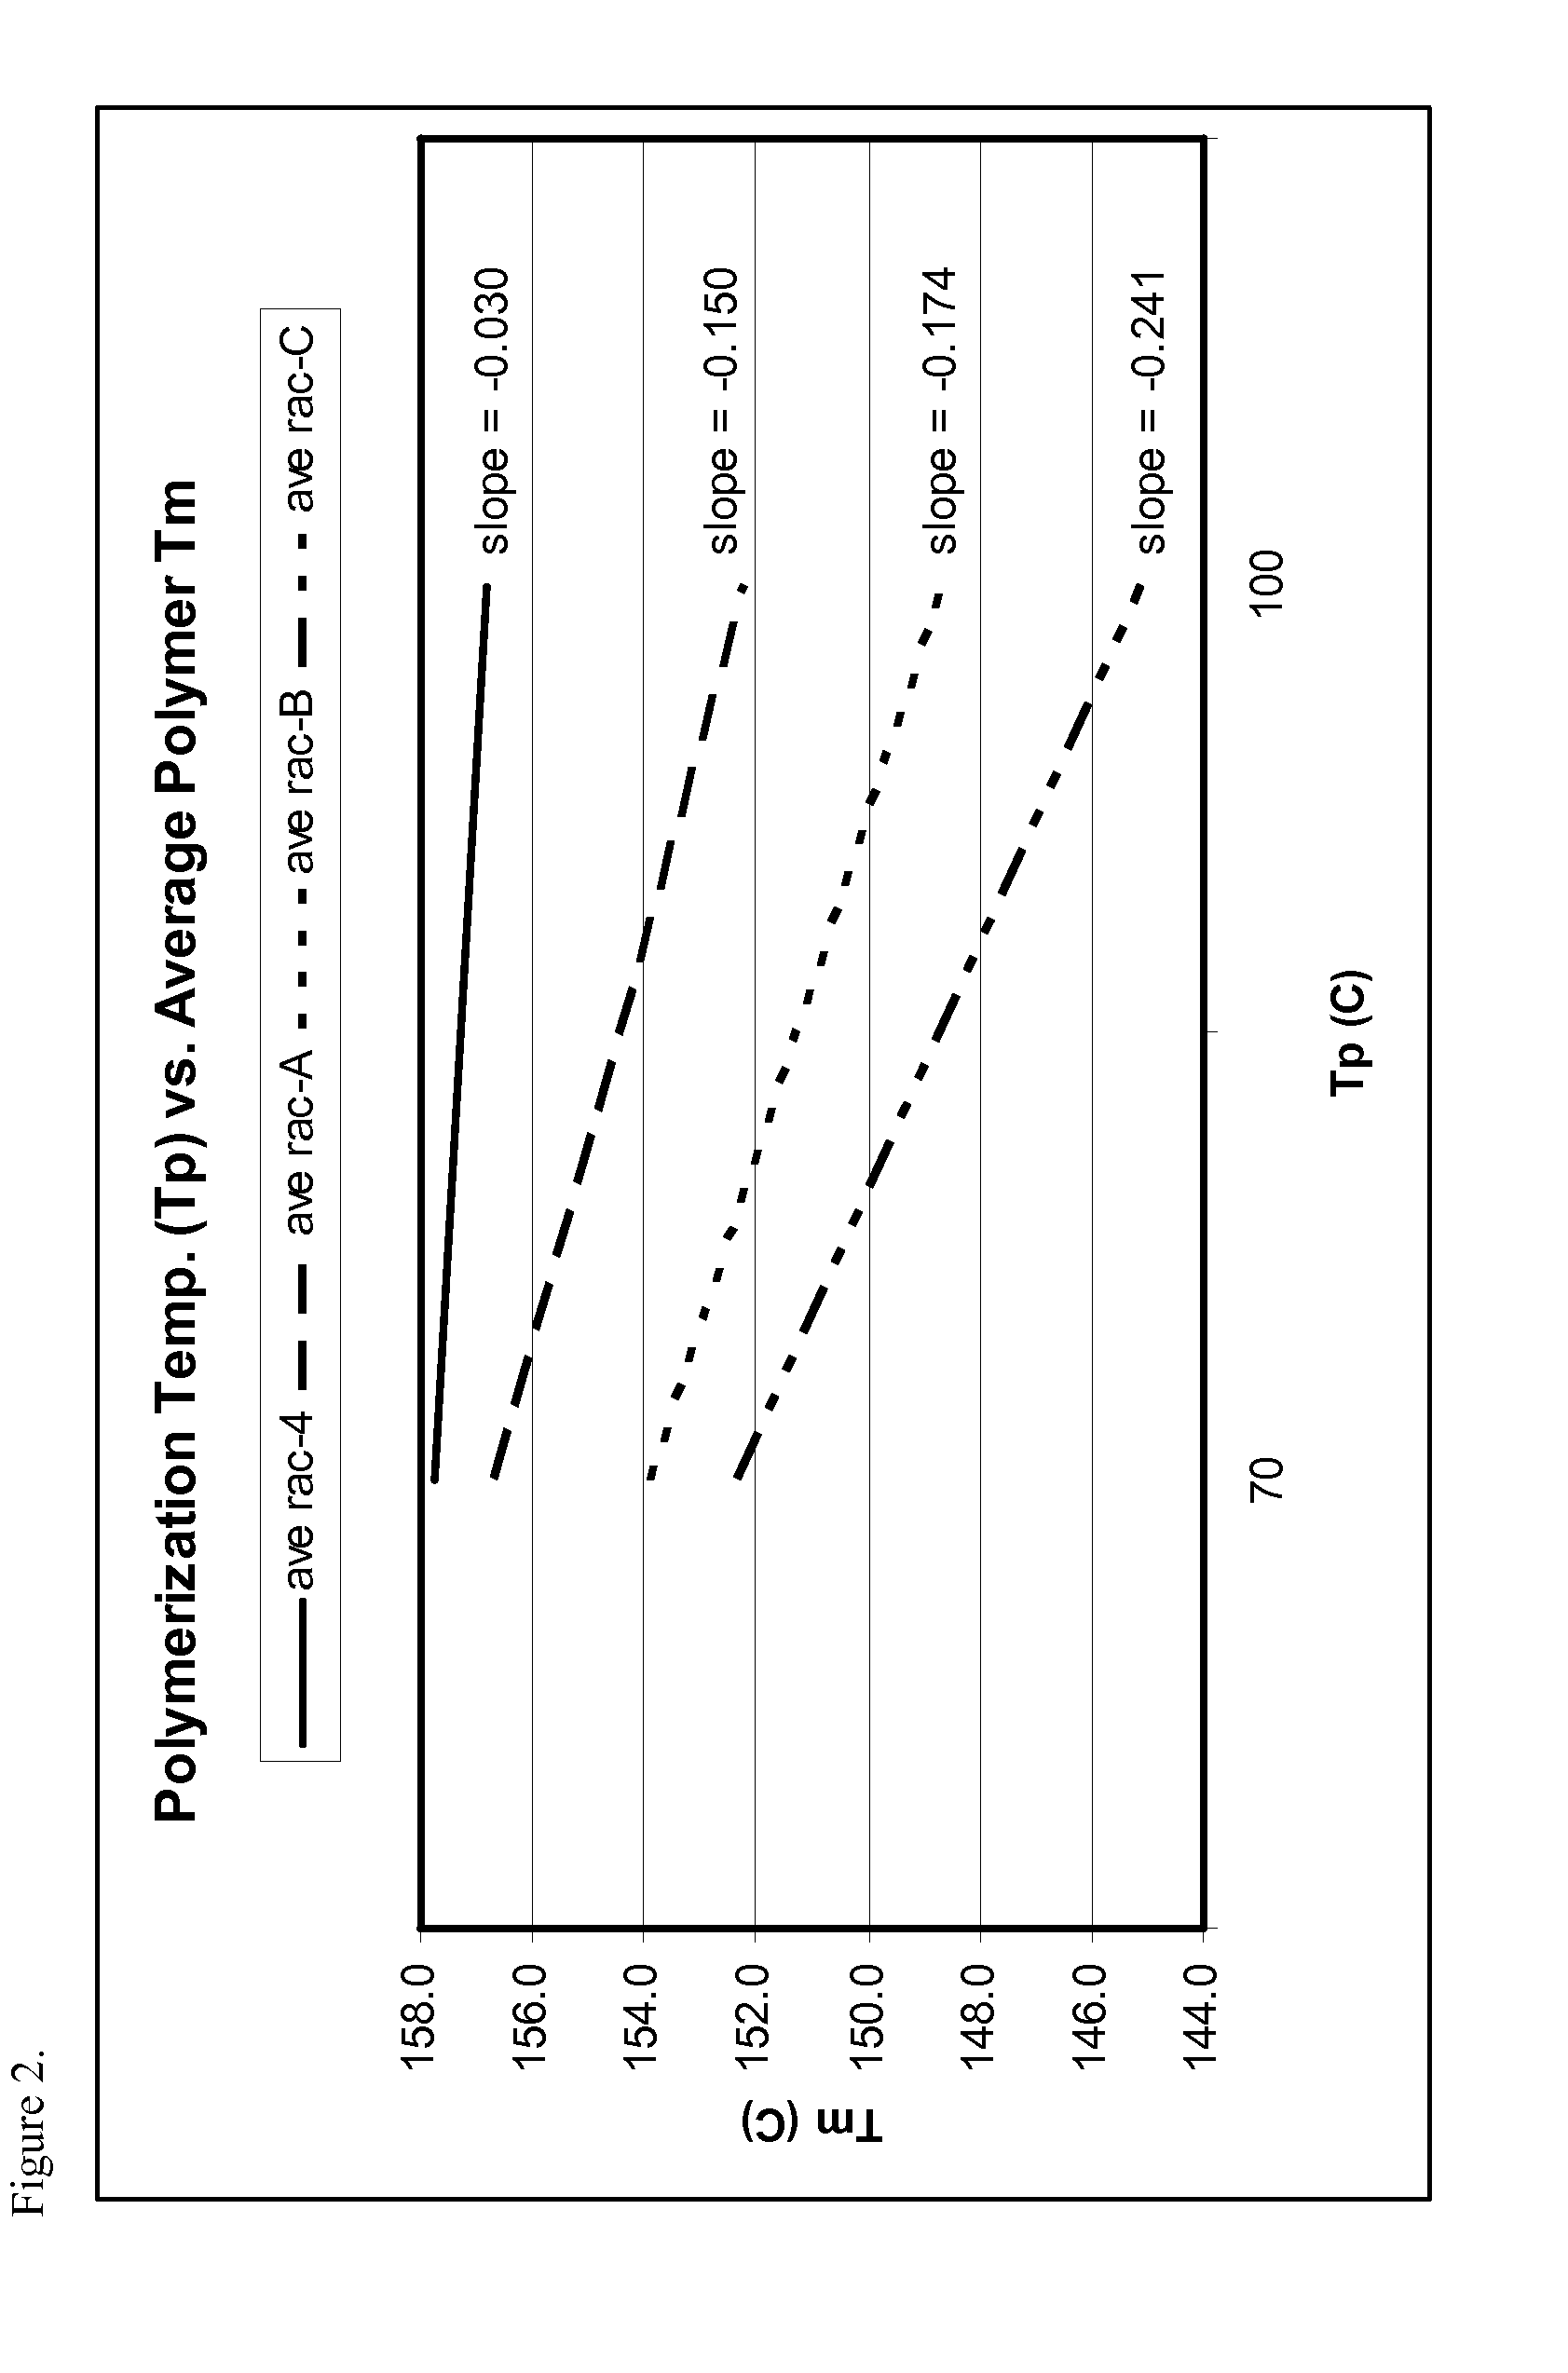 Production of Propylene-Based Polymers